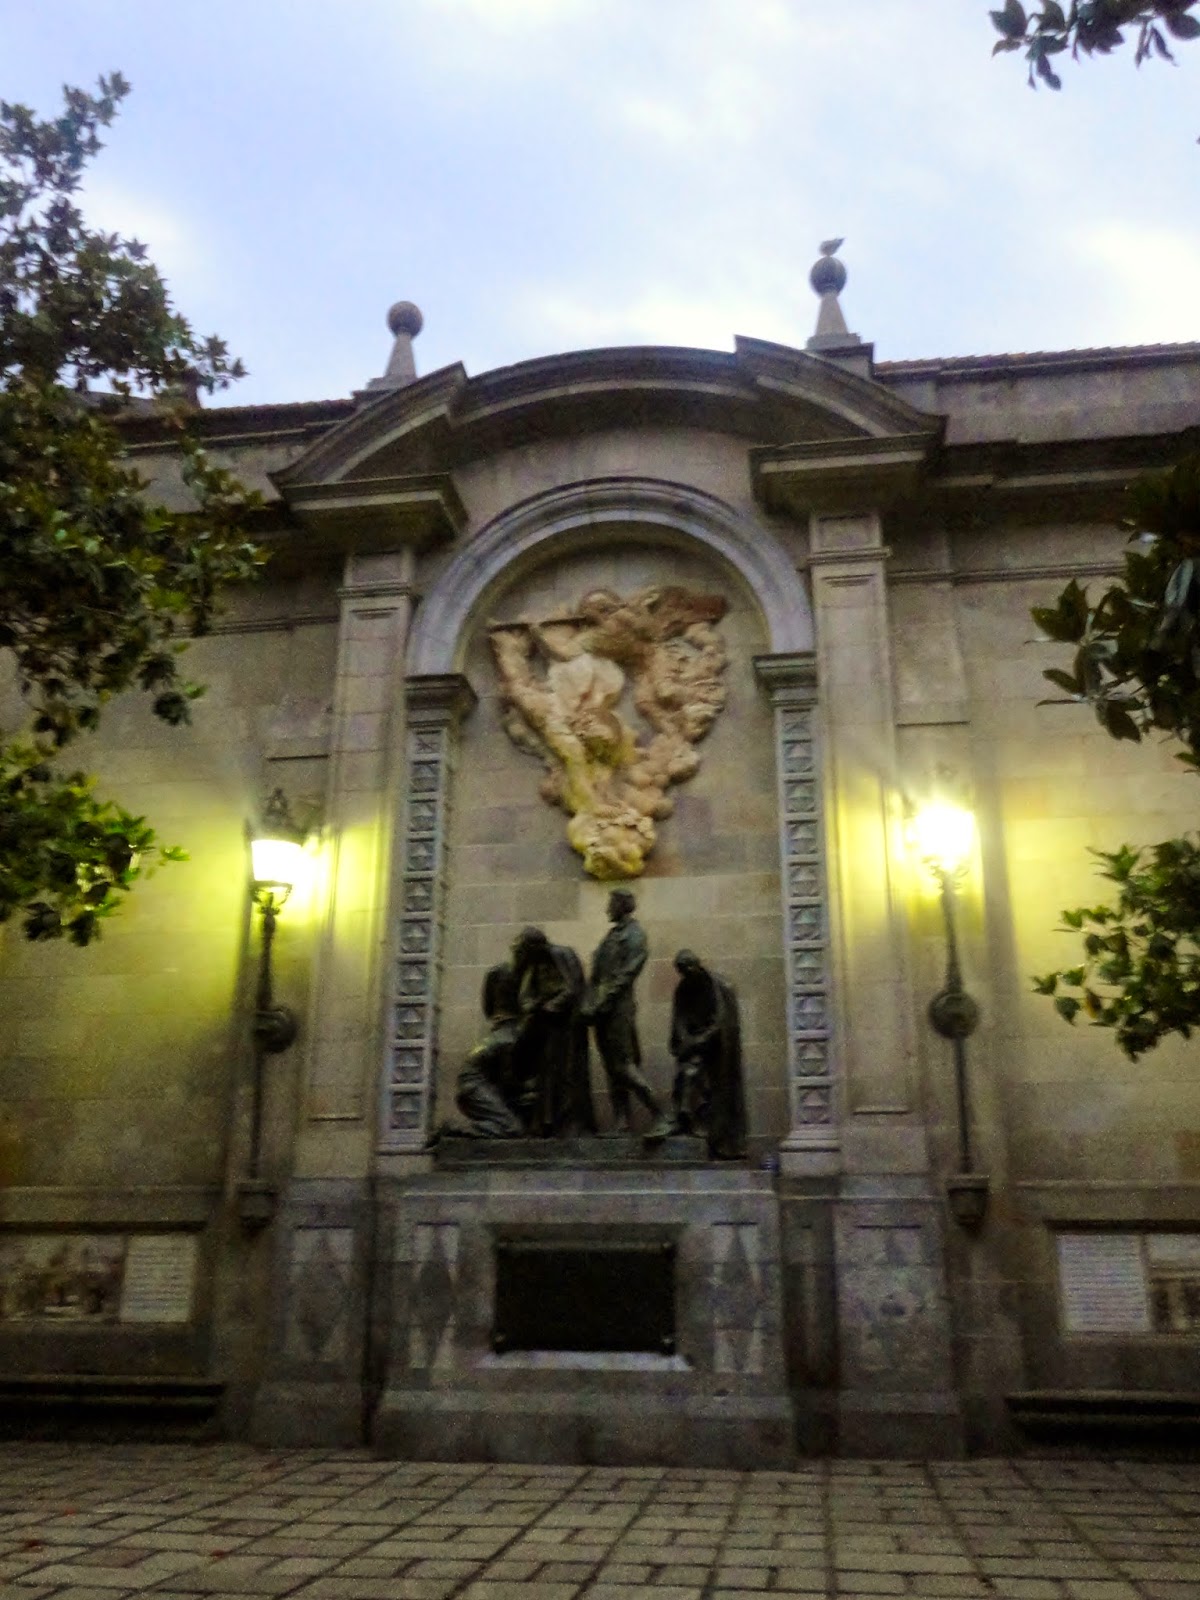 Architecture in Barcelona's Gothic quarter